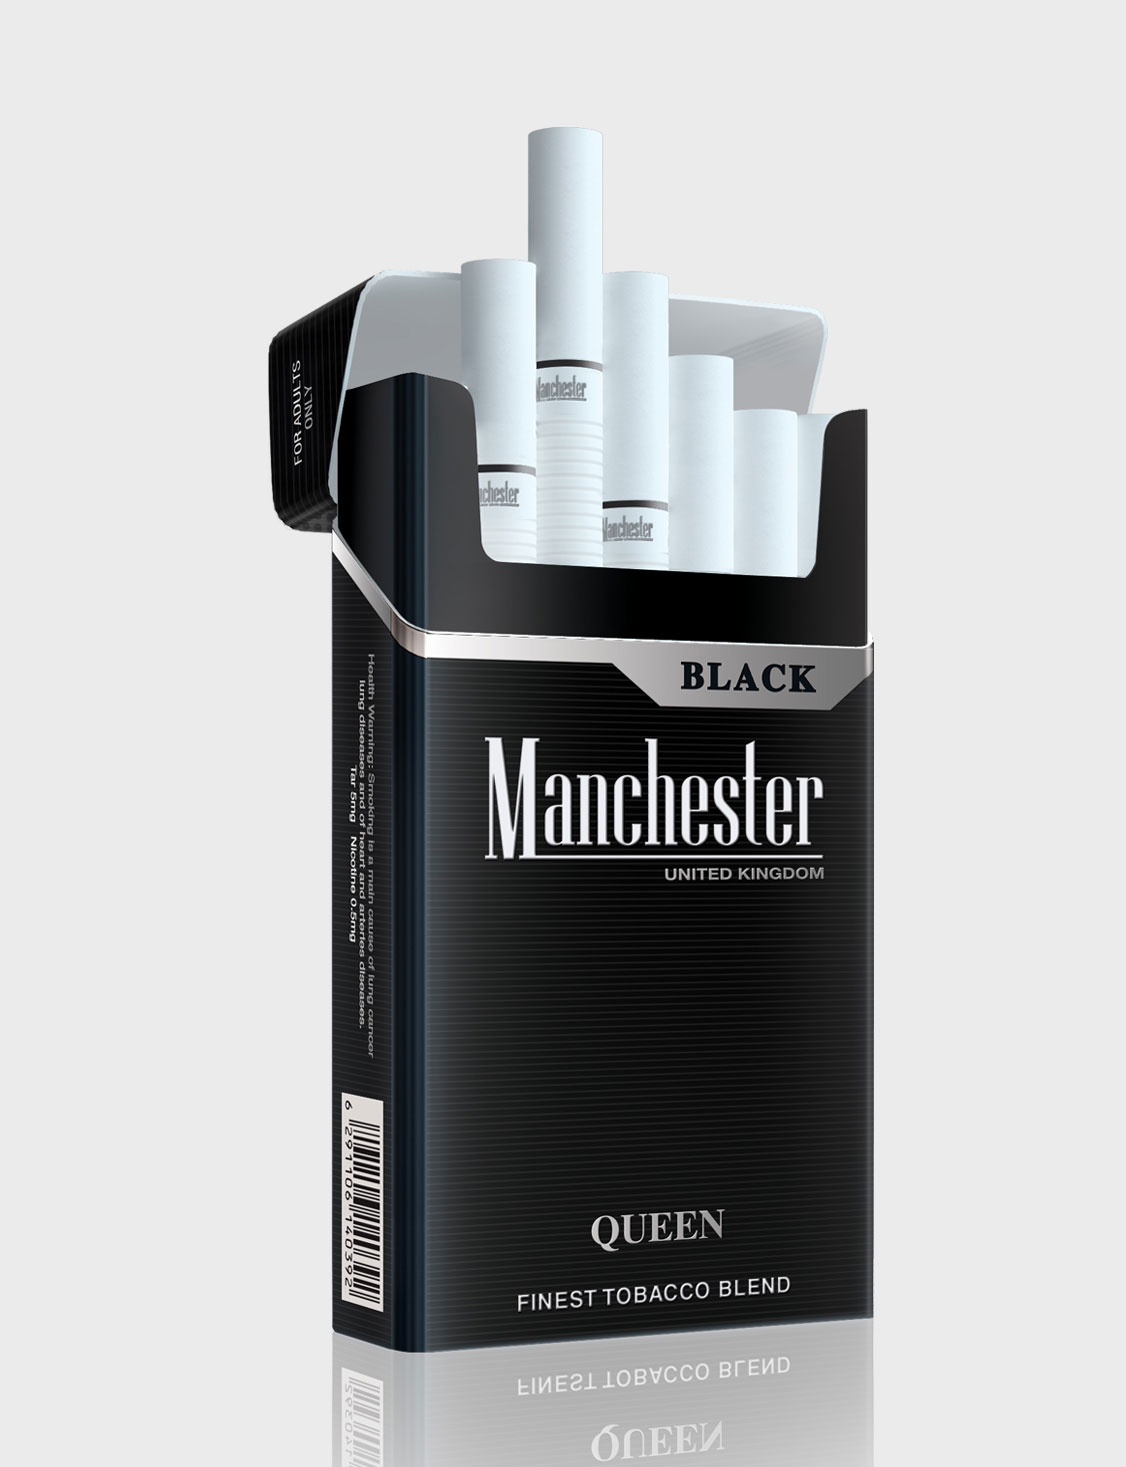 Блэк компакт. Сигареты Манчестер Блэк компакт. Манчестер нано Блэк сигареты. Сигареты Манчестер Юнайтед кингдом. Manchester сигареты Compact Blue.